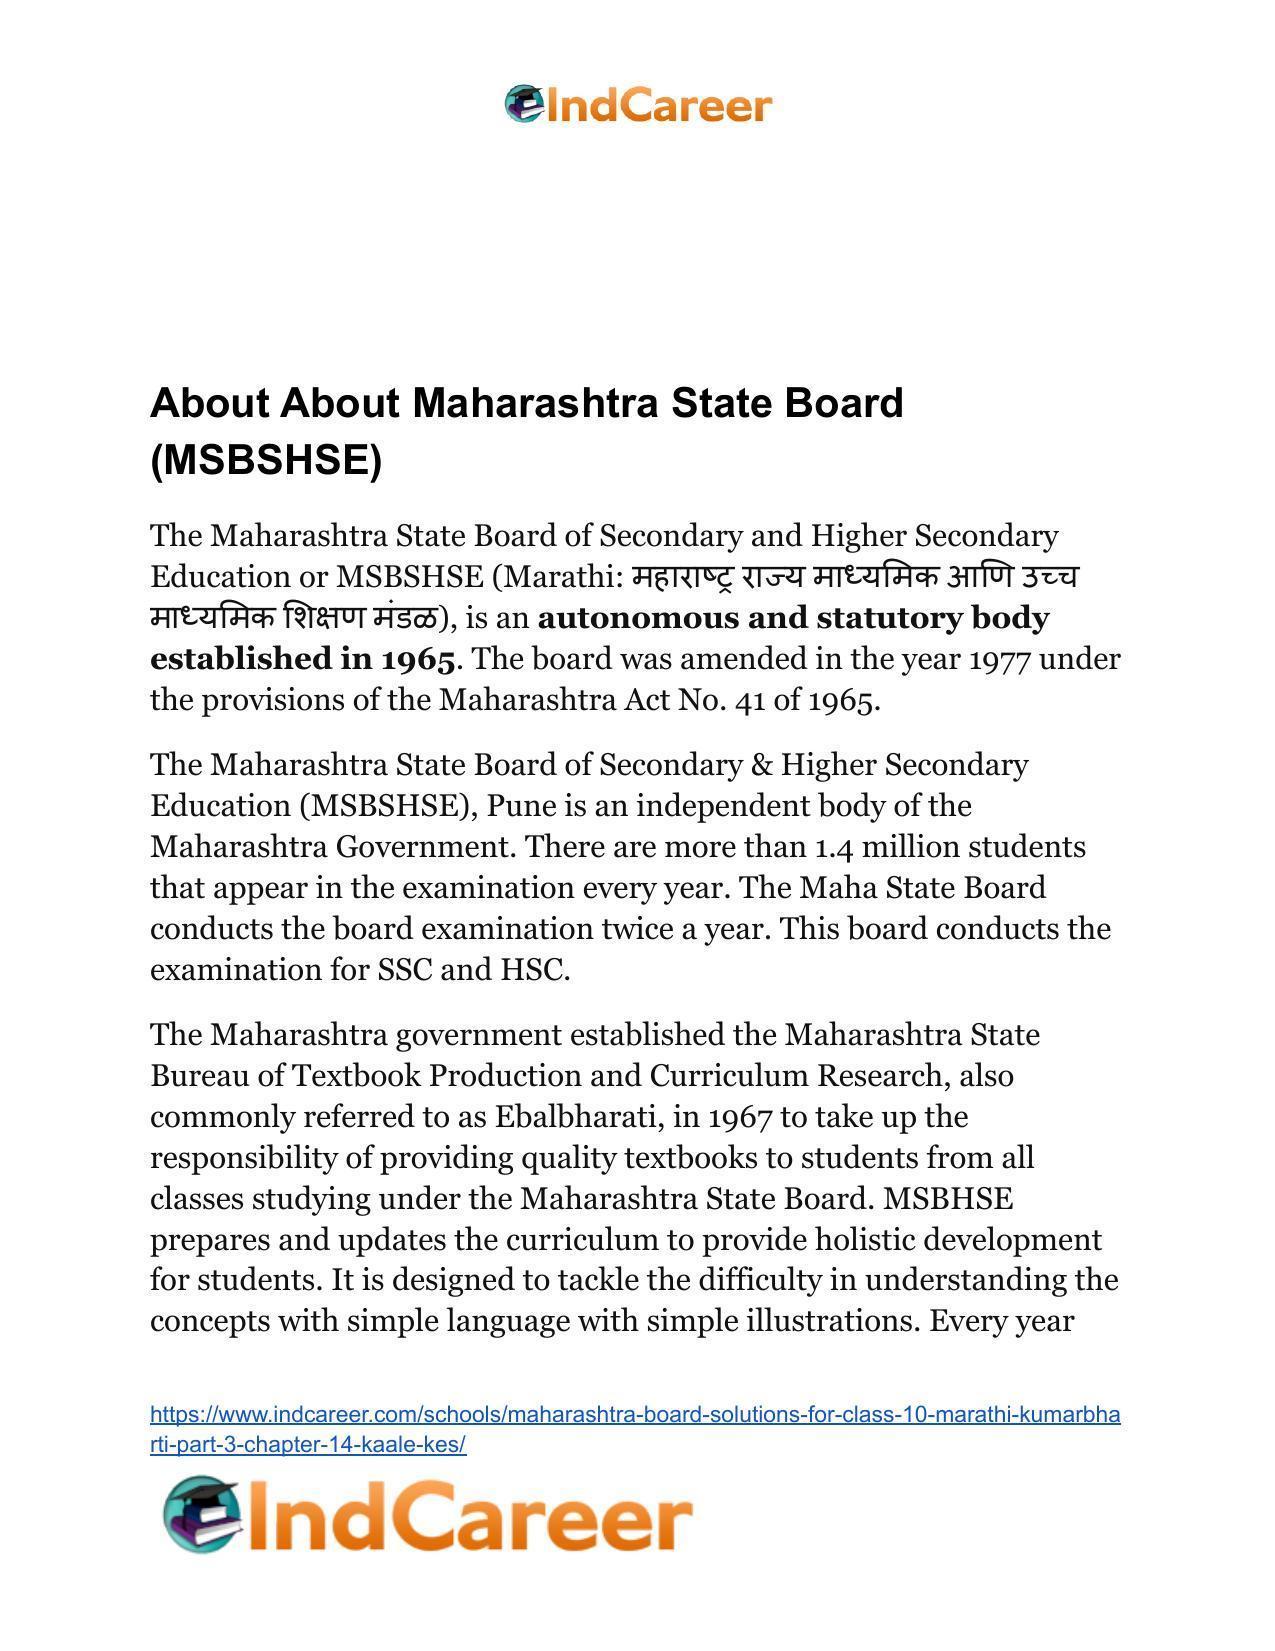 Maharashtra Board Solutions for Class 10- Marathi Kumarbharti (Part- 3): Chapter 14- काळे केस - Page 21